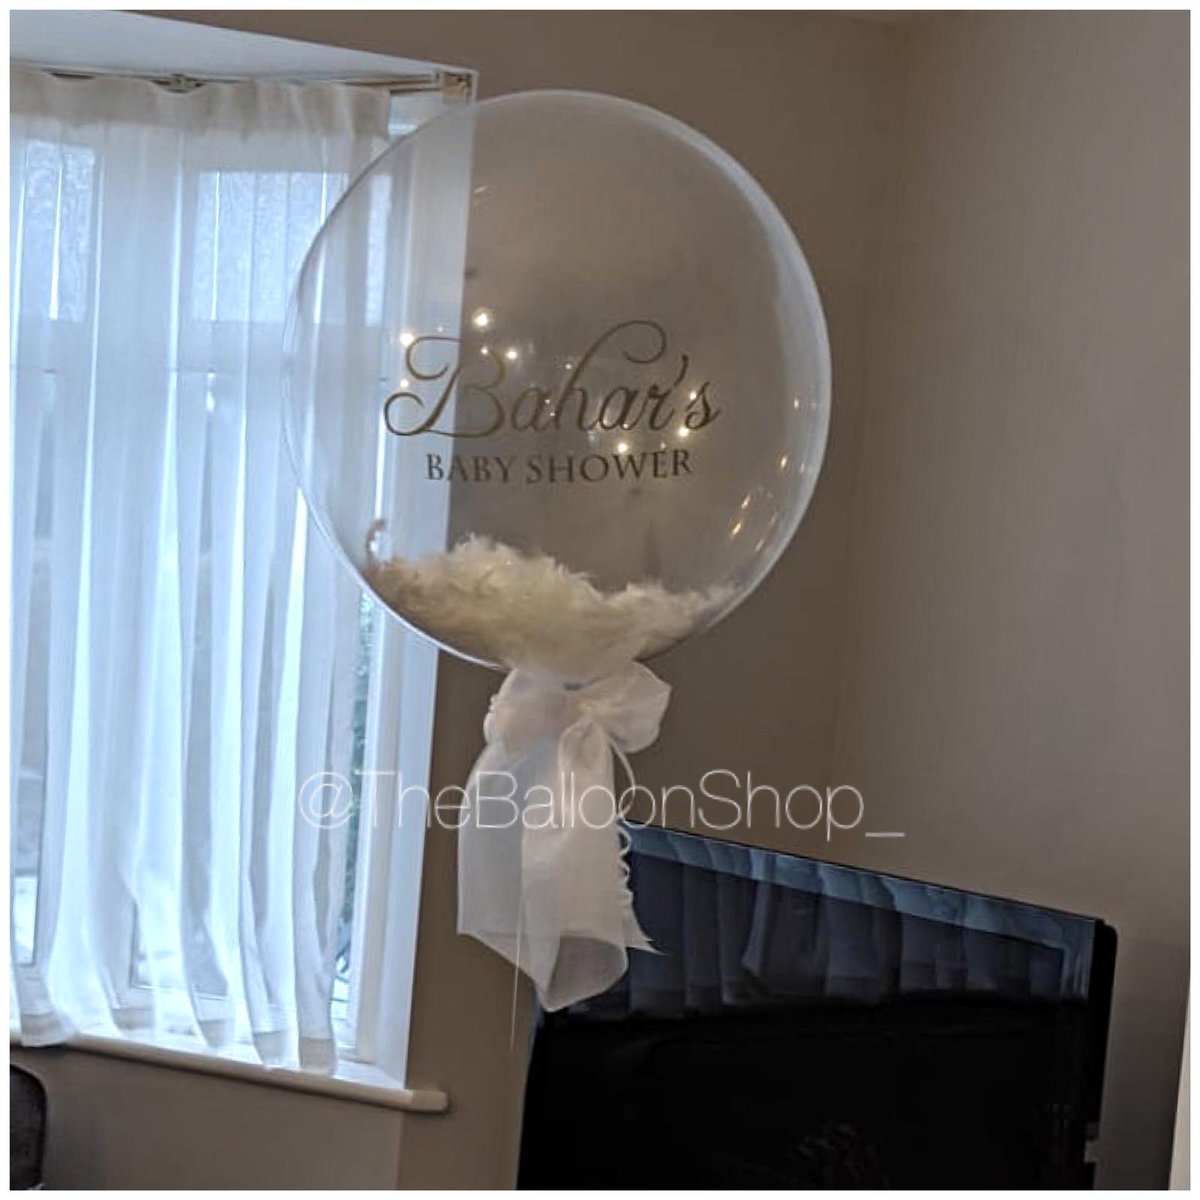 Personalised 24' bubble balloon filled with white feathers.
#personalisedballoons #silverandwhite #whitefeathers #featherballoons #bubbleballoons #luxuryballoons #bespoke #custom #babyshower #babyshowerballoons